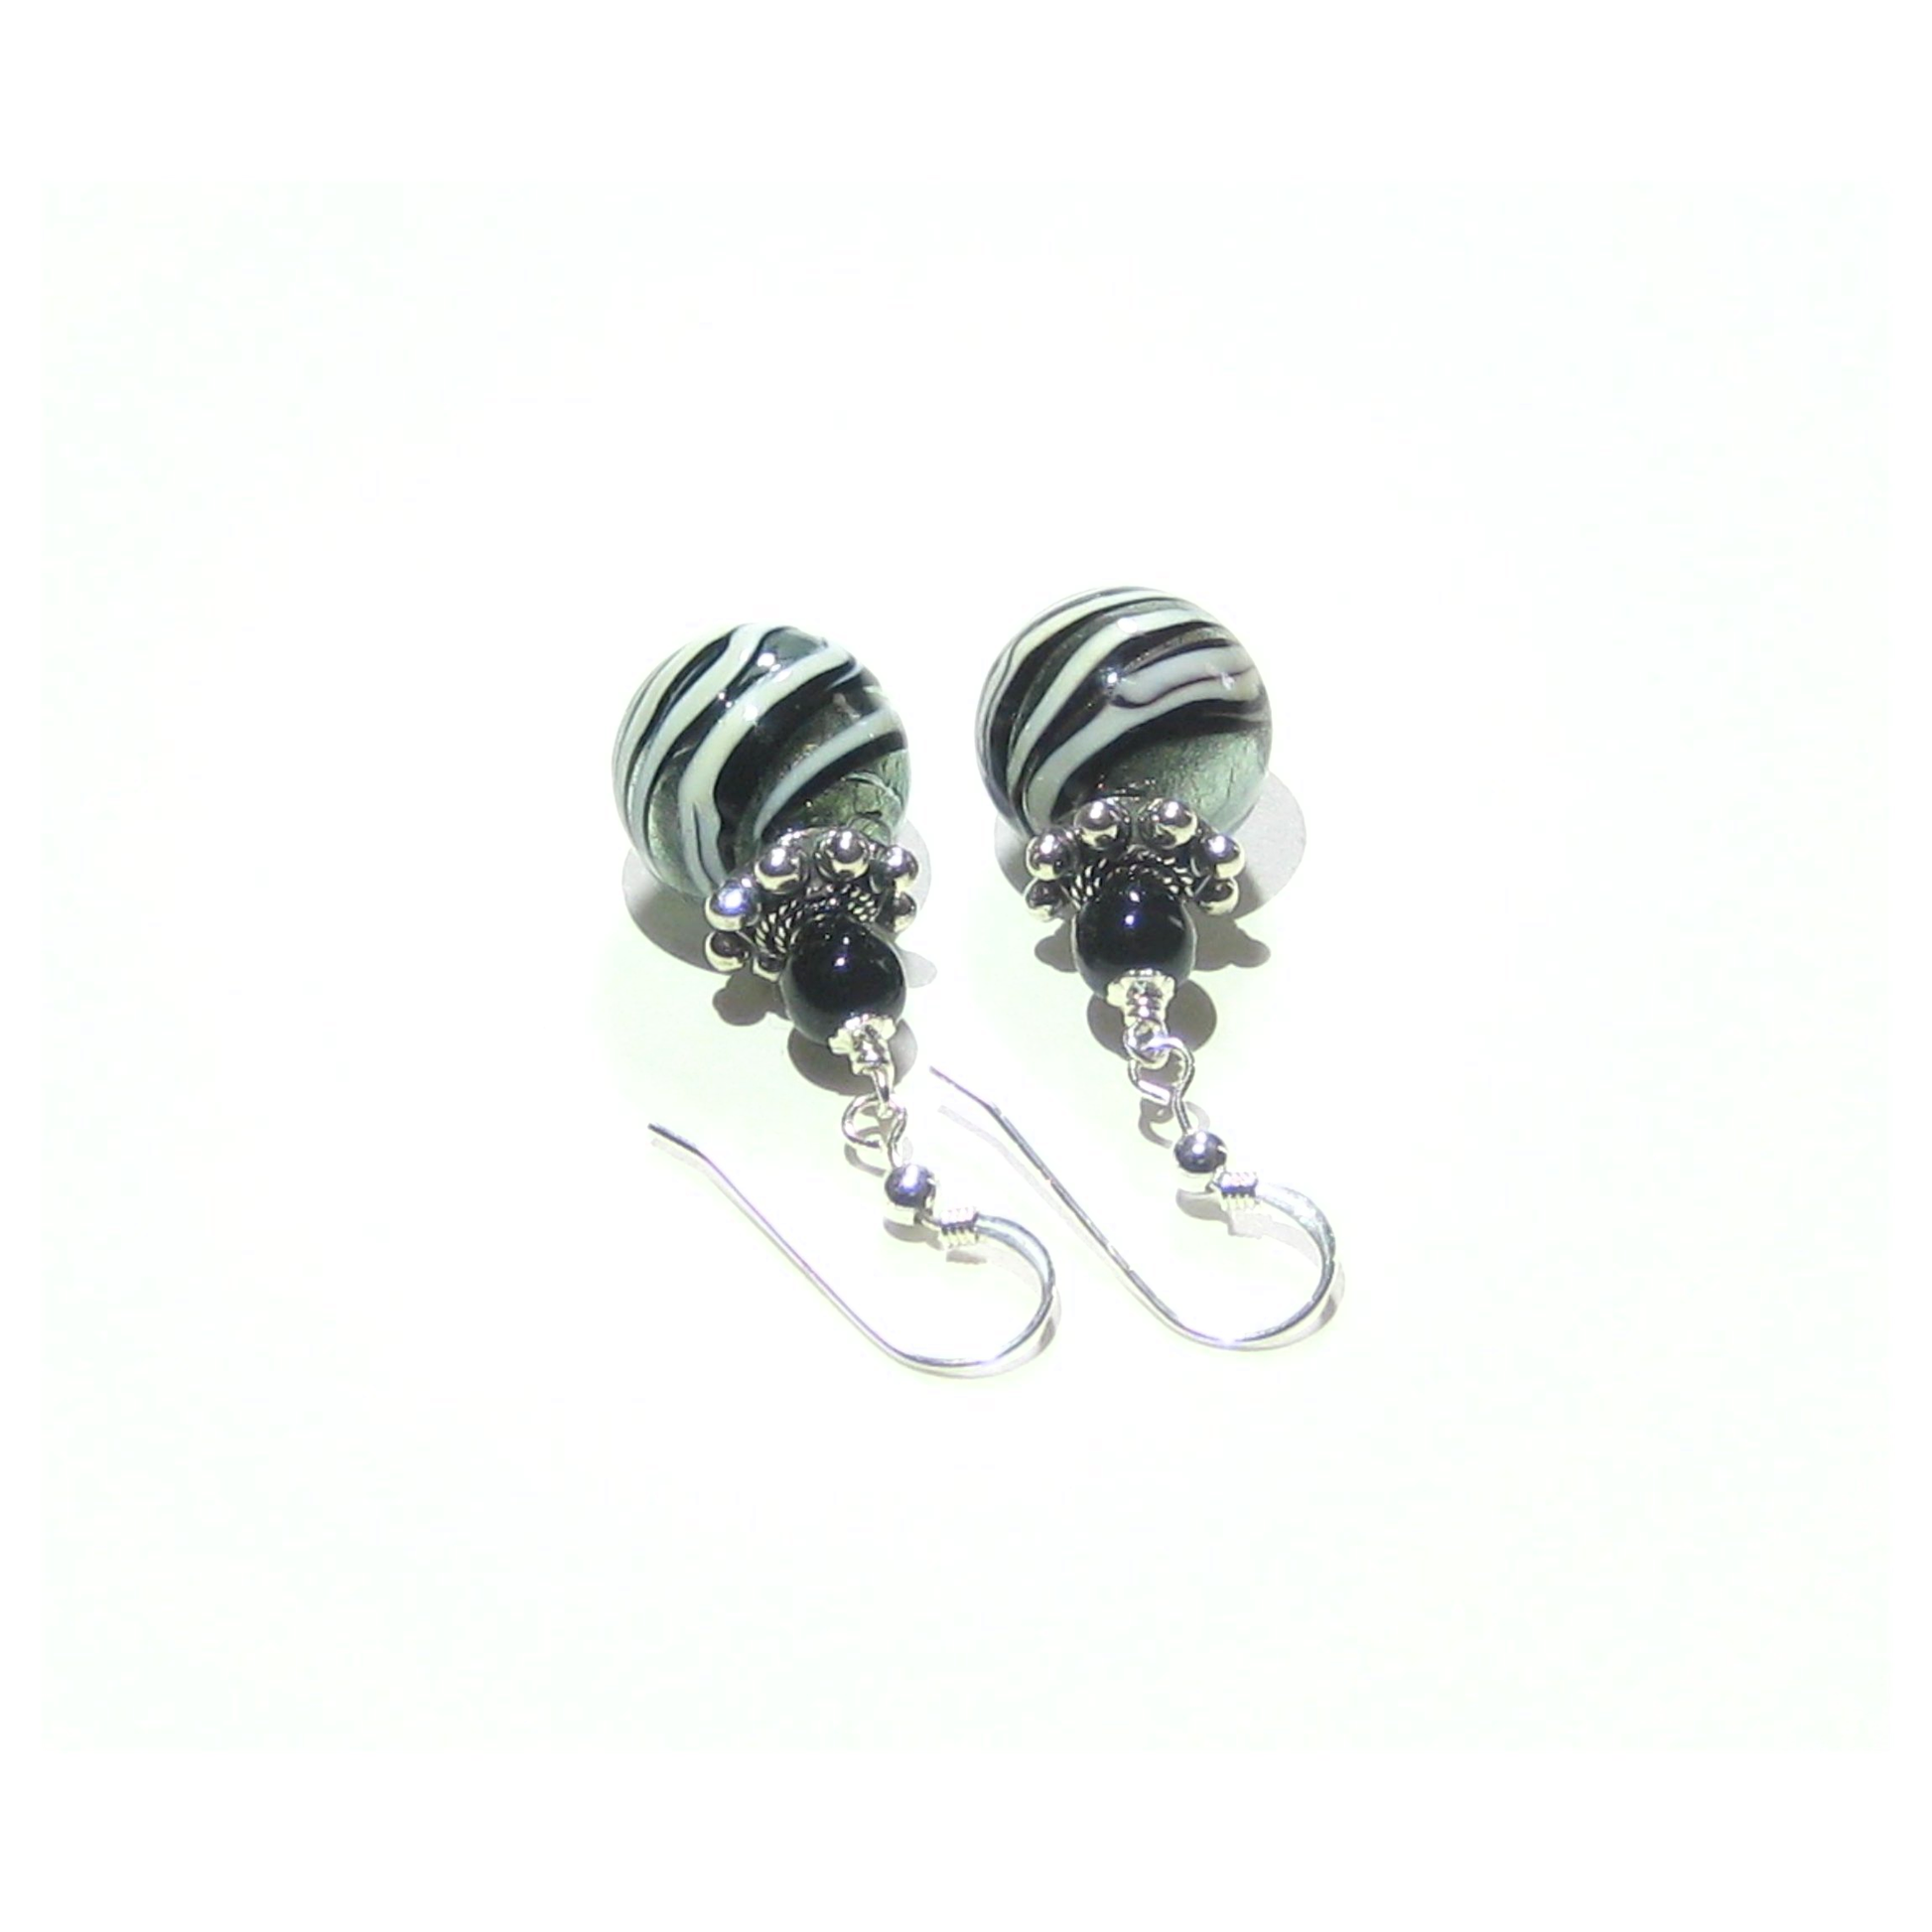 Murano Glass Black Steel Swirl Ball Silver Earrings, Italian Jewelry - JKC Murano